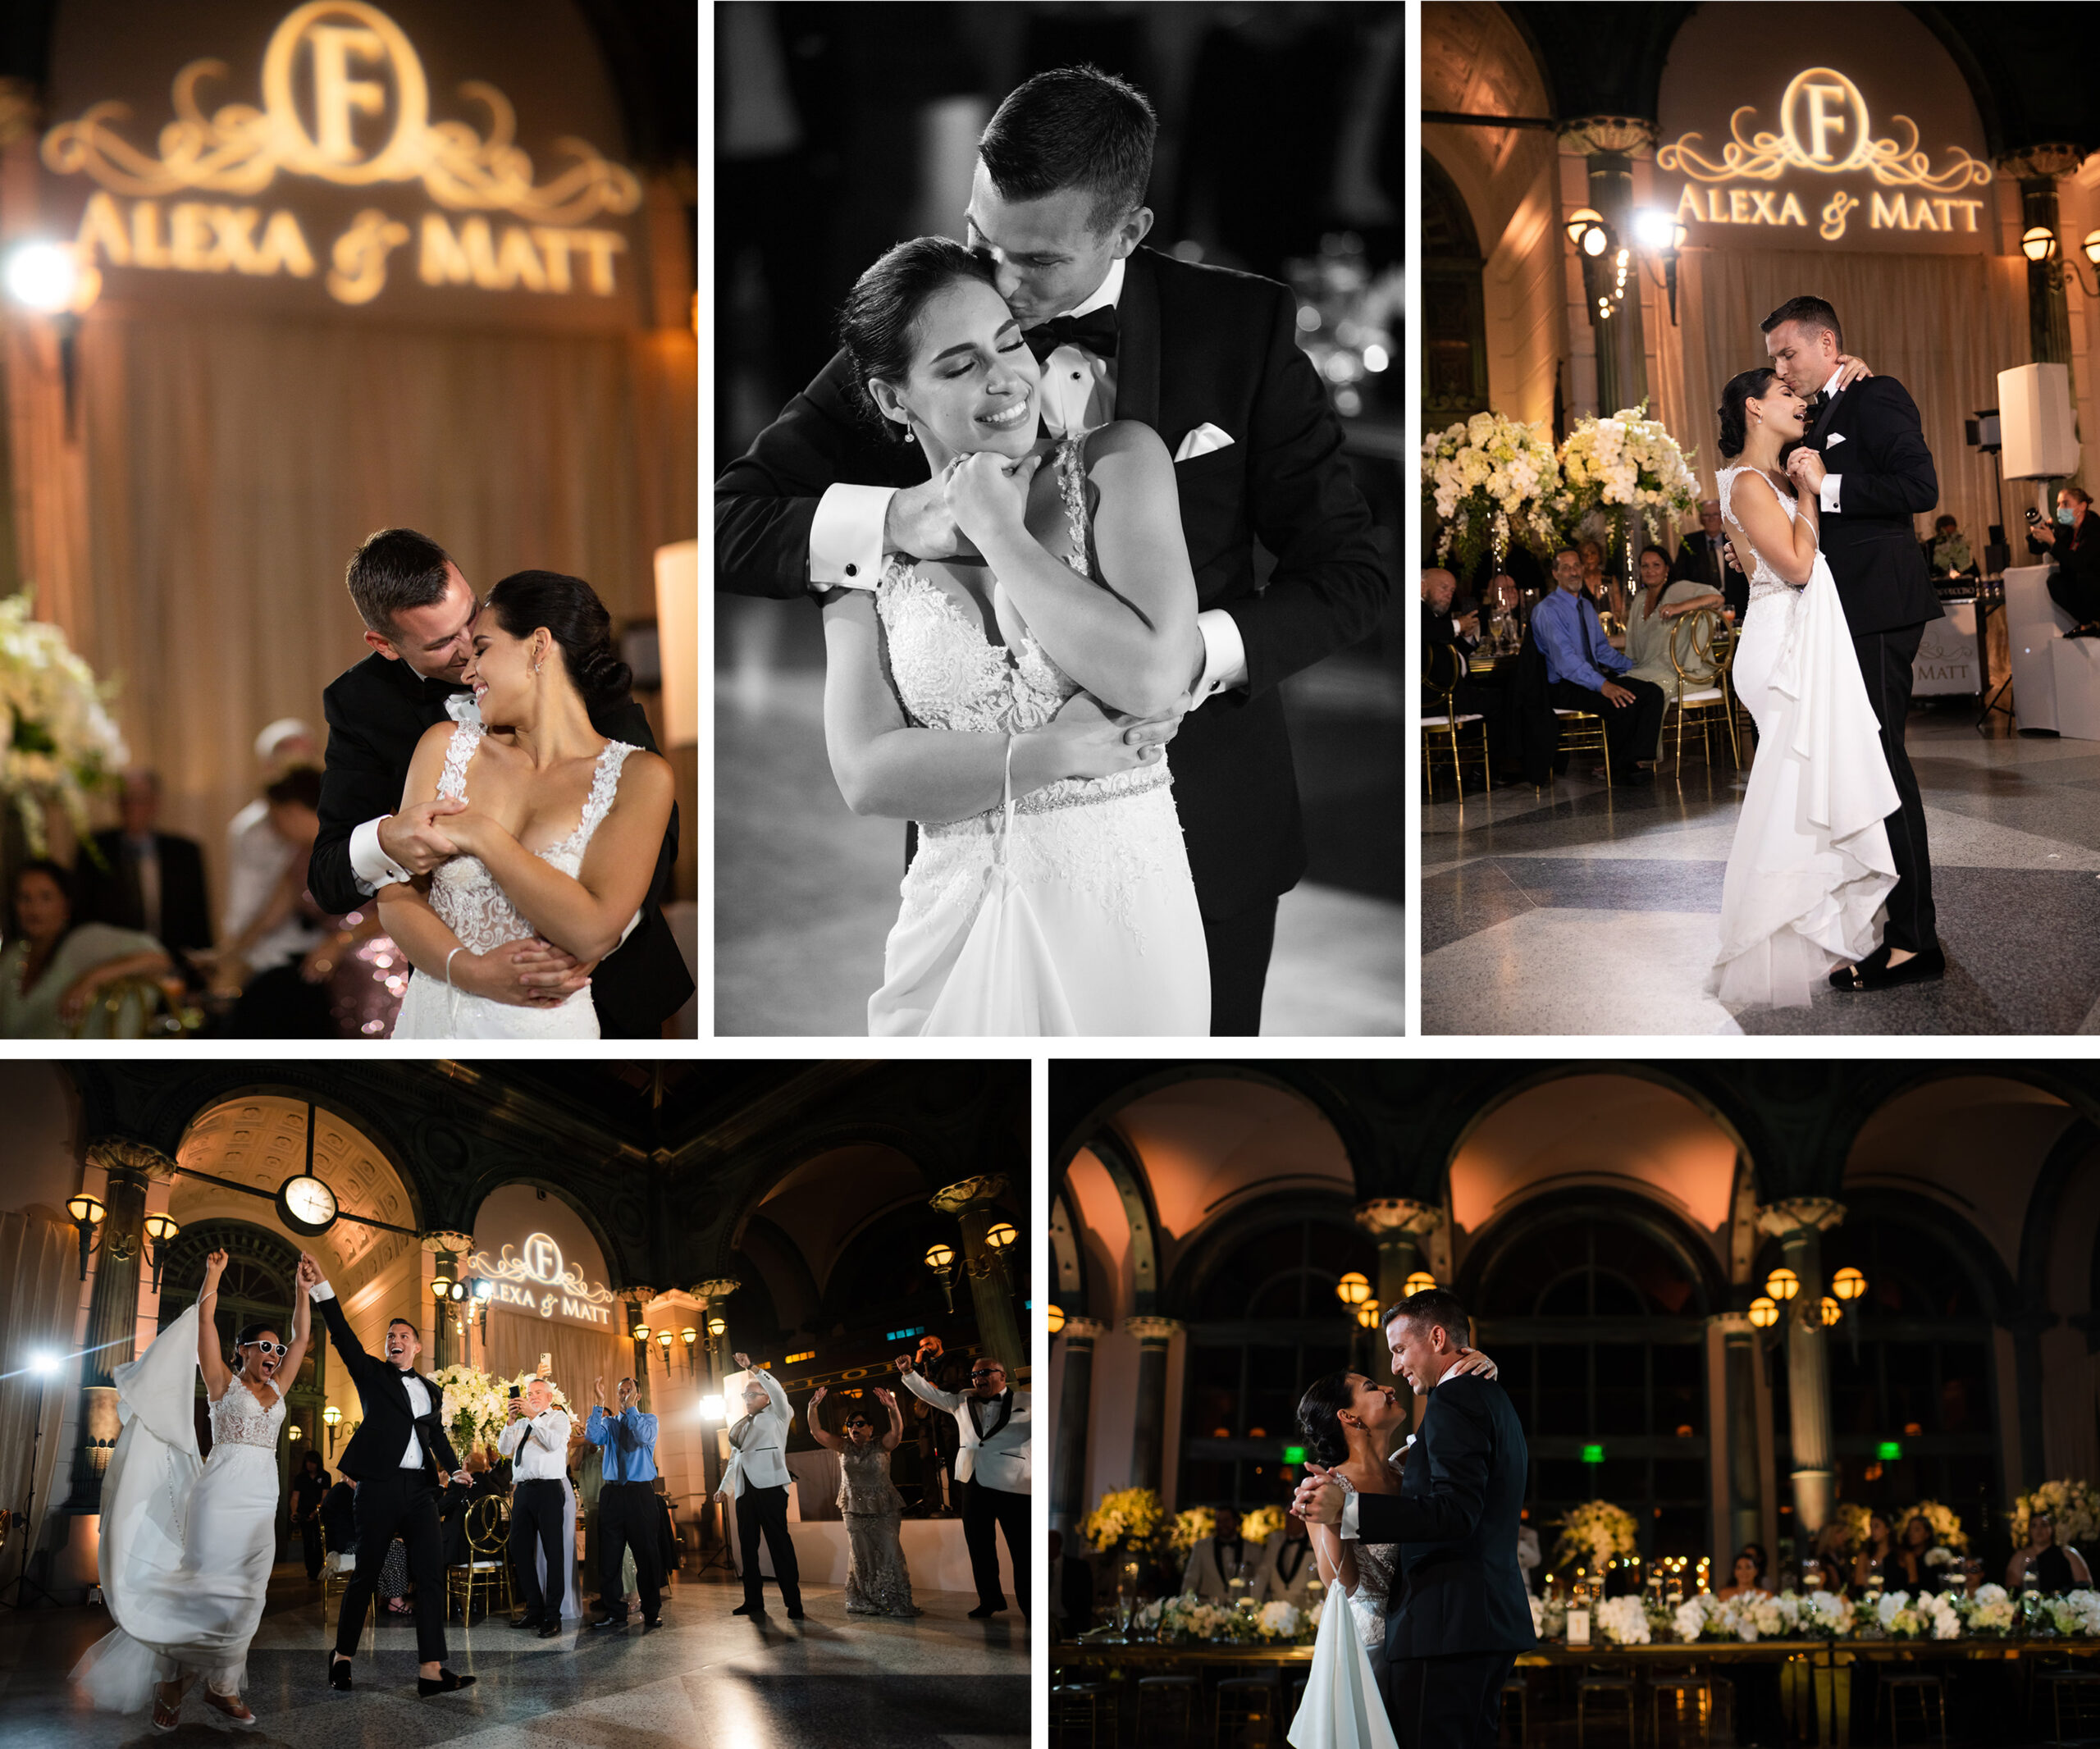 Matt Fraser and Alexa Papigiotis Wedding Photos by Abby Hart Photo